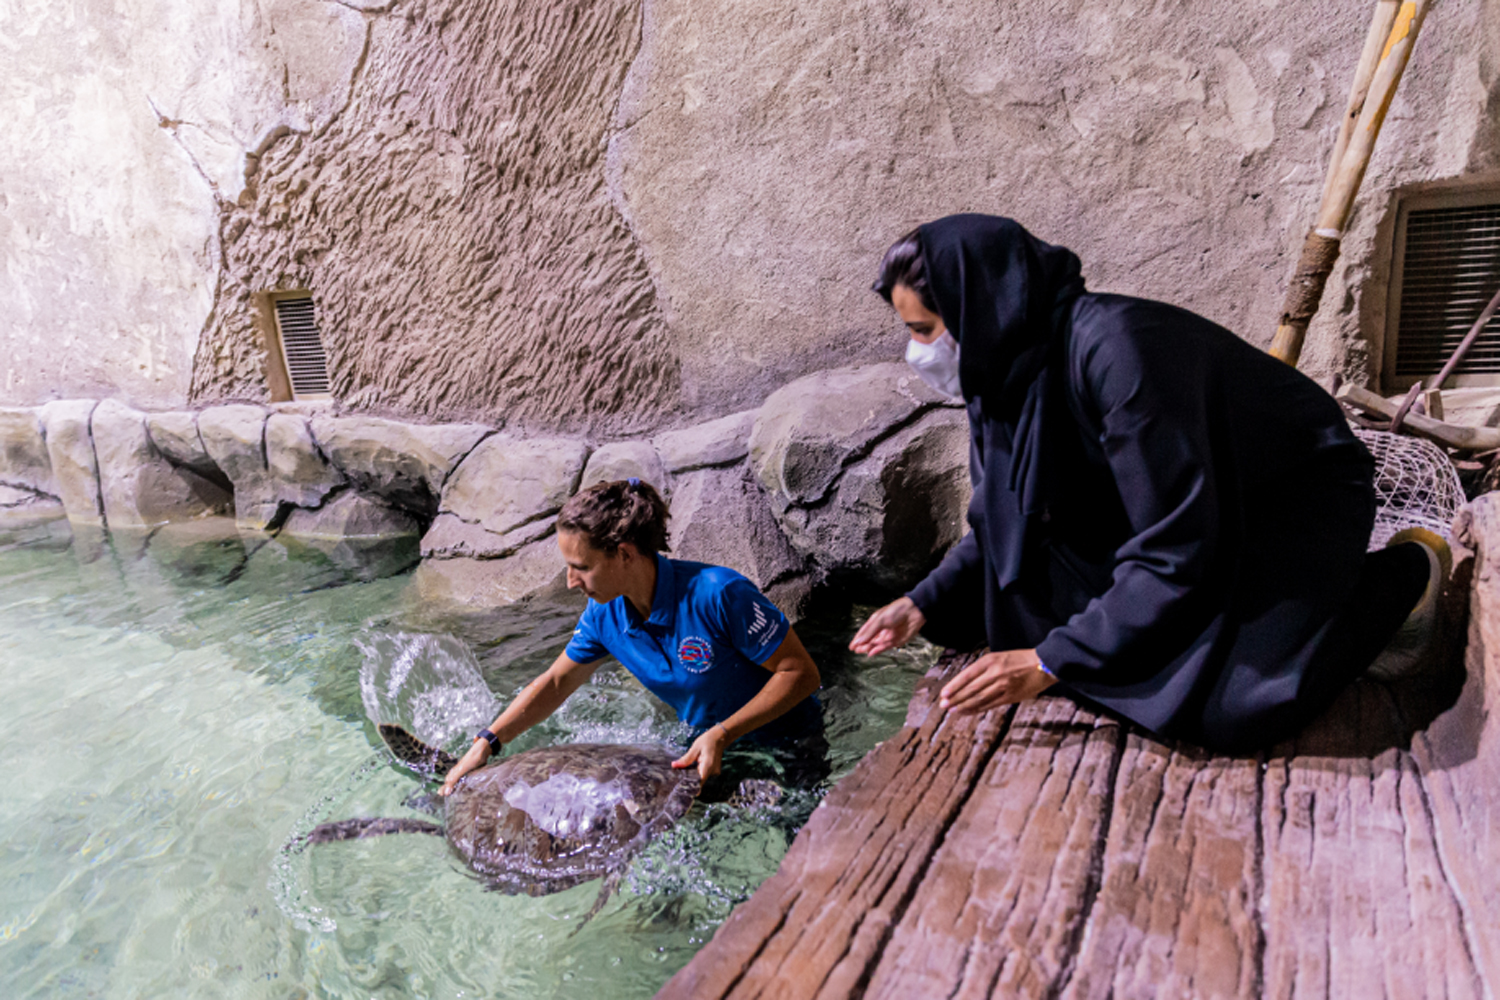 Abu Dhabi's National Aquarium is rehabilitating animals ahead of opening |  Time Out Dubai